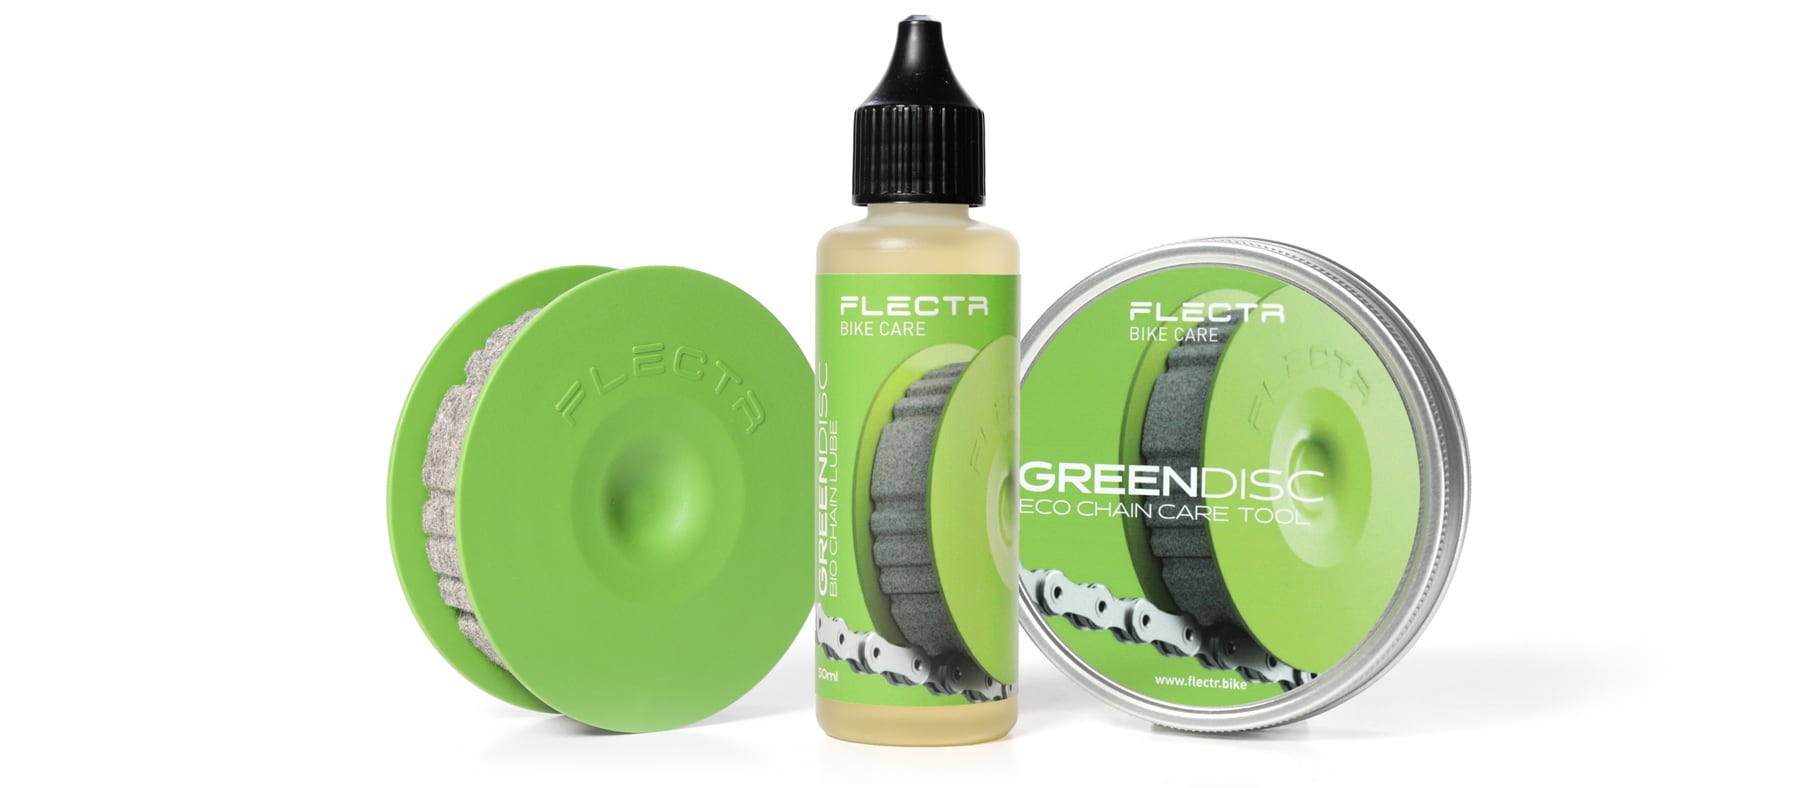 FLECTR GREEN DISC - the original eco-chain care tool